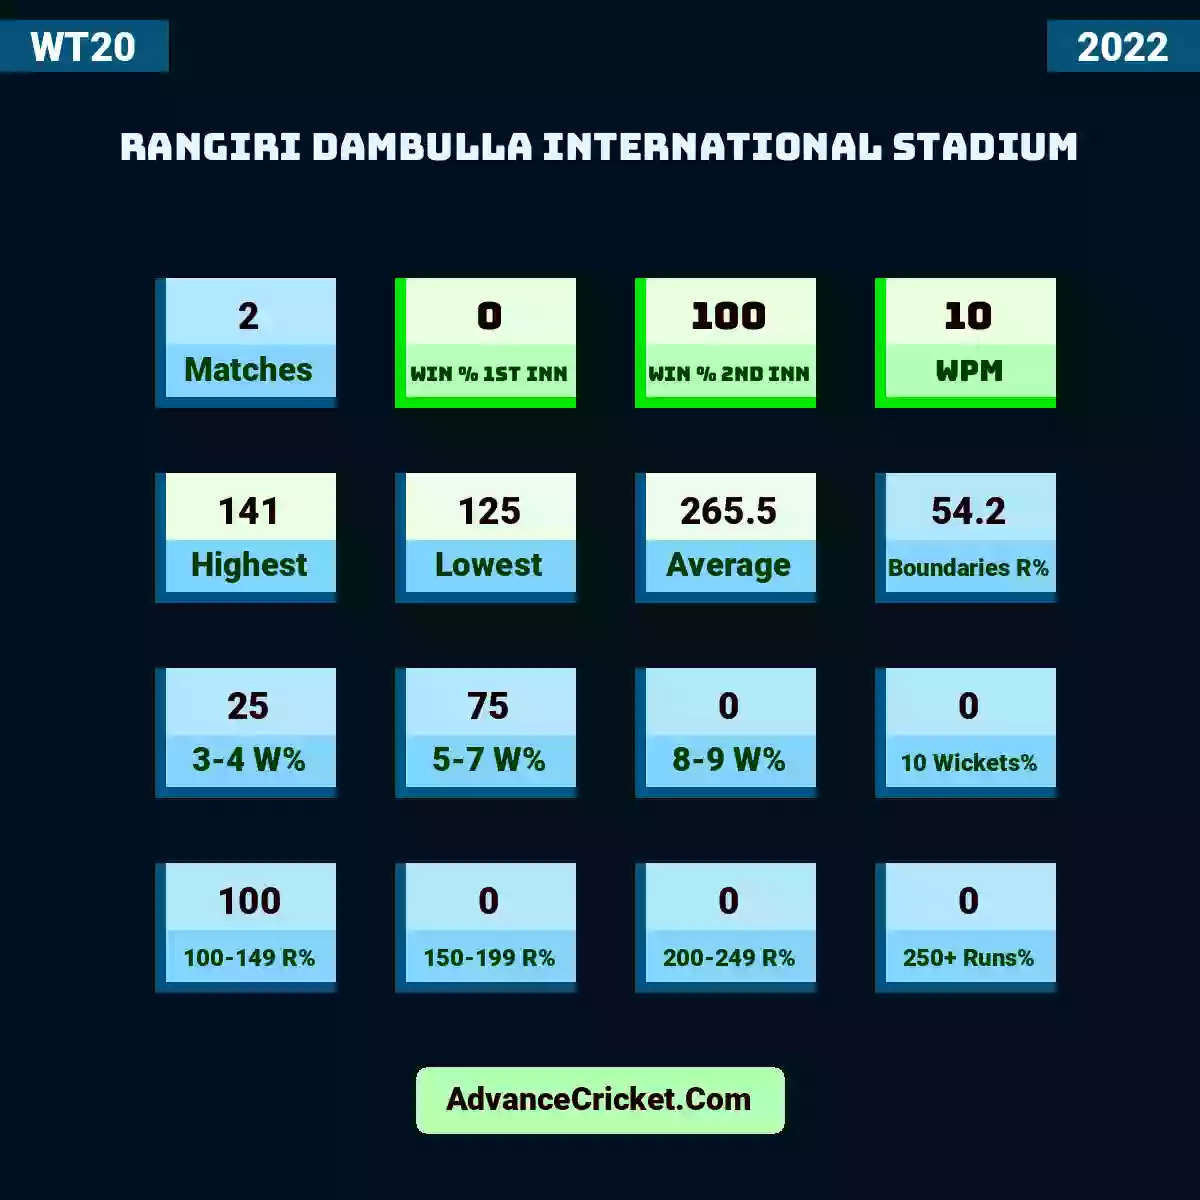 Image showing Rangiri Dambulla International Stadium with Matches: 2, Win % 1st Inn: 0, Win % 2nd Inn: 100, WPM: 10, Highest: 141, Lowest: 125, Average: 265.5, Boundaries R%: 54.2, 3-4 W%: 25, 5-7 W%: 75, 8-9 W%: 0, 10 Wickets%: 0, 100-149 R%: 100, 150-199 R%: 0, 200-249 R%: 0, 250+ Runs%: 0.